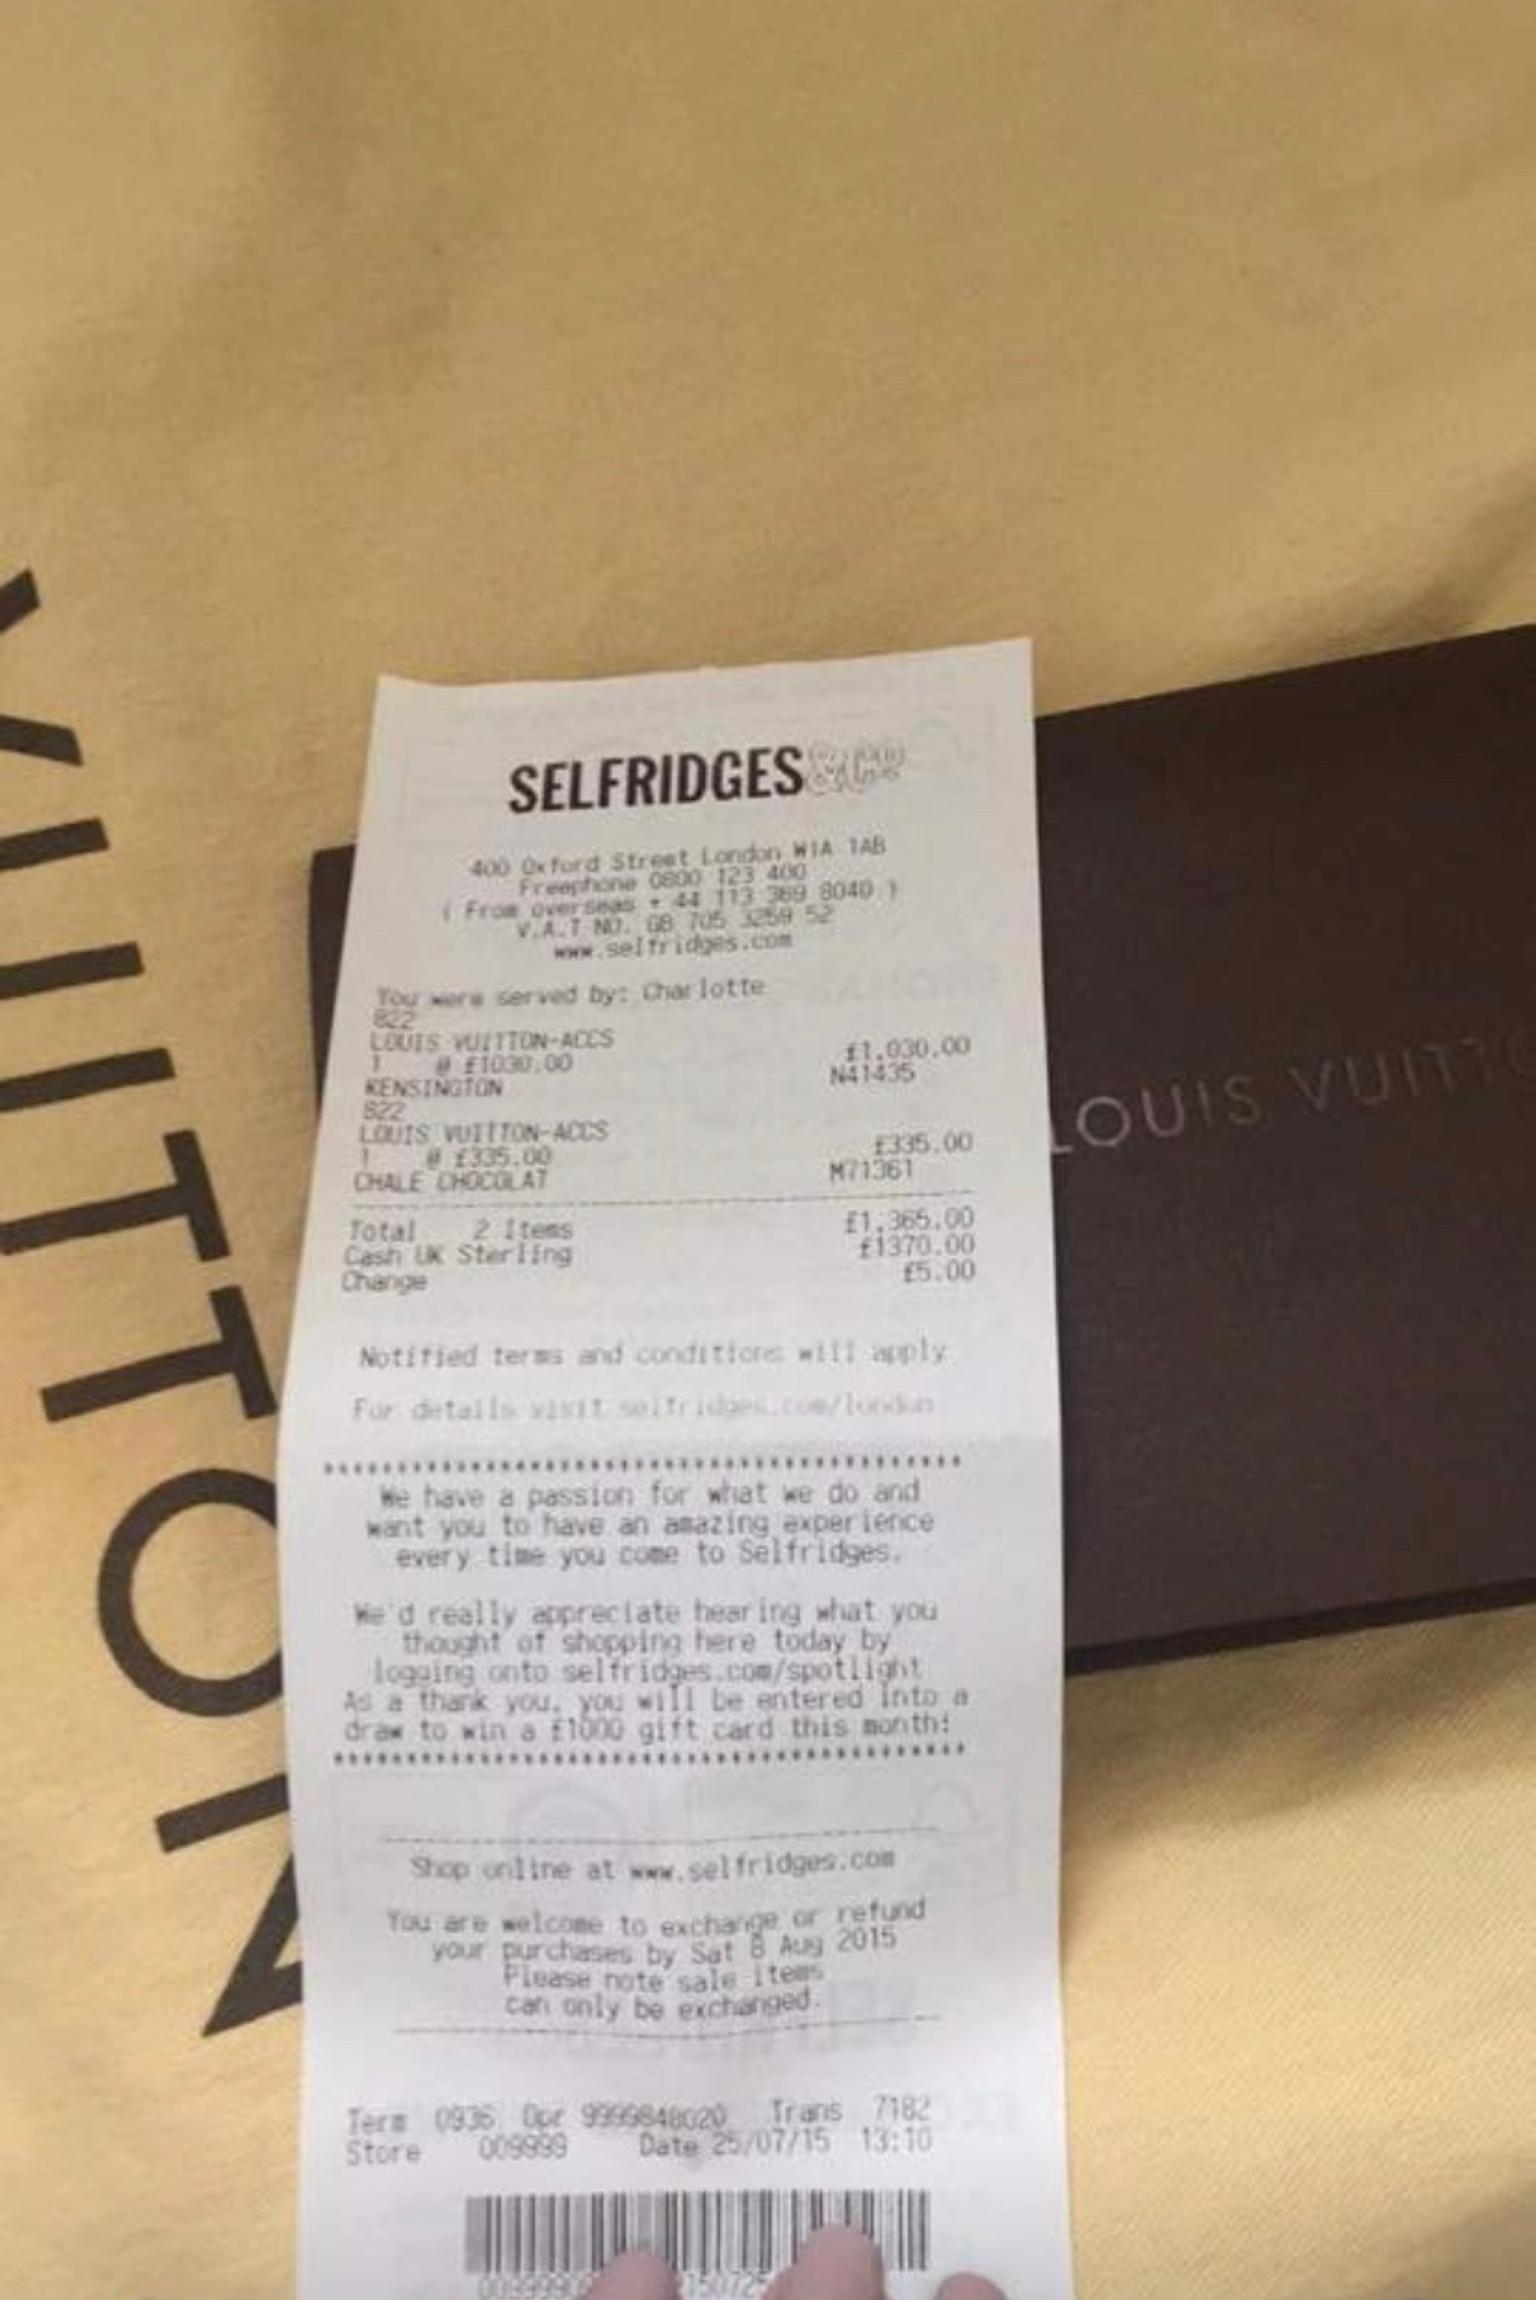 Louis Vuitton Receipts - repfinesse.win 